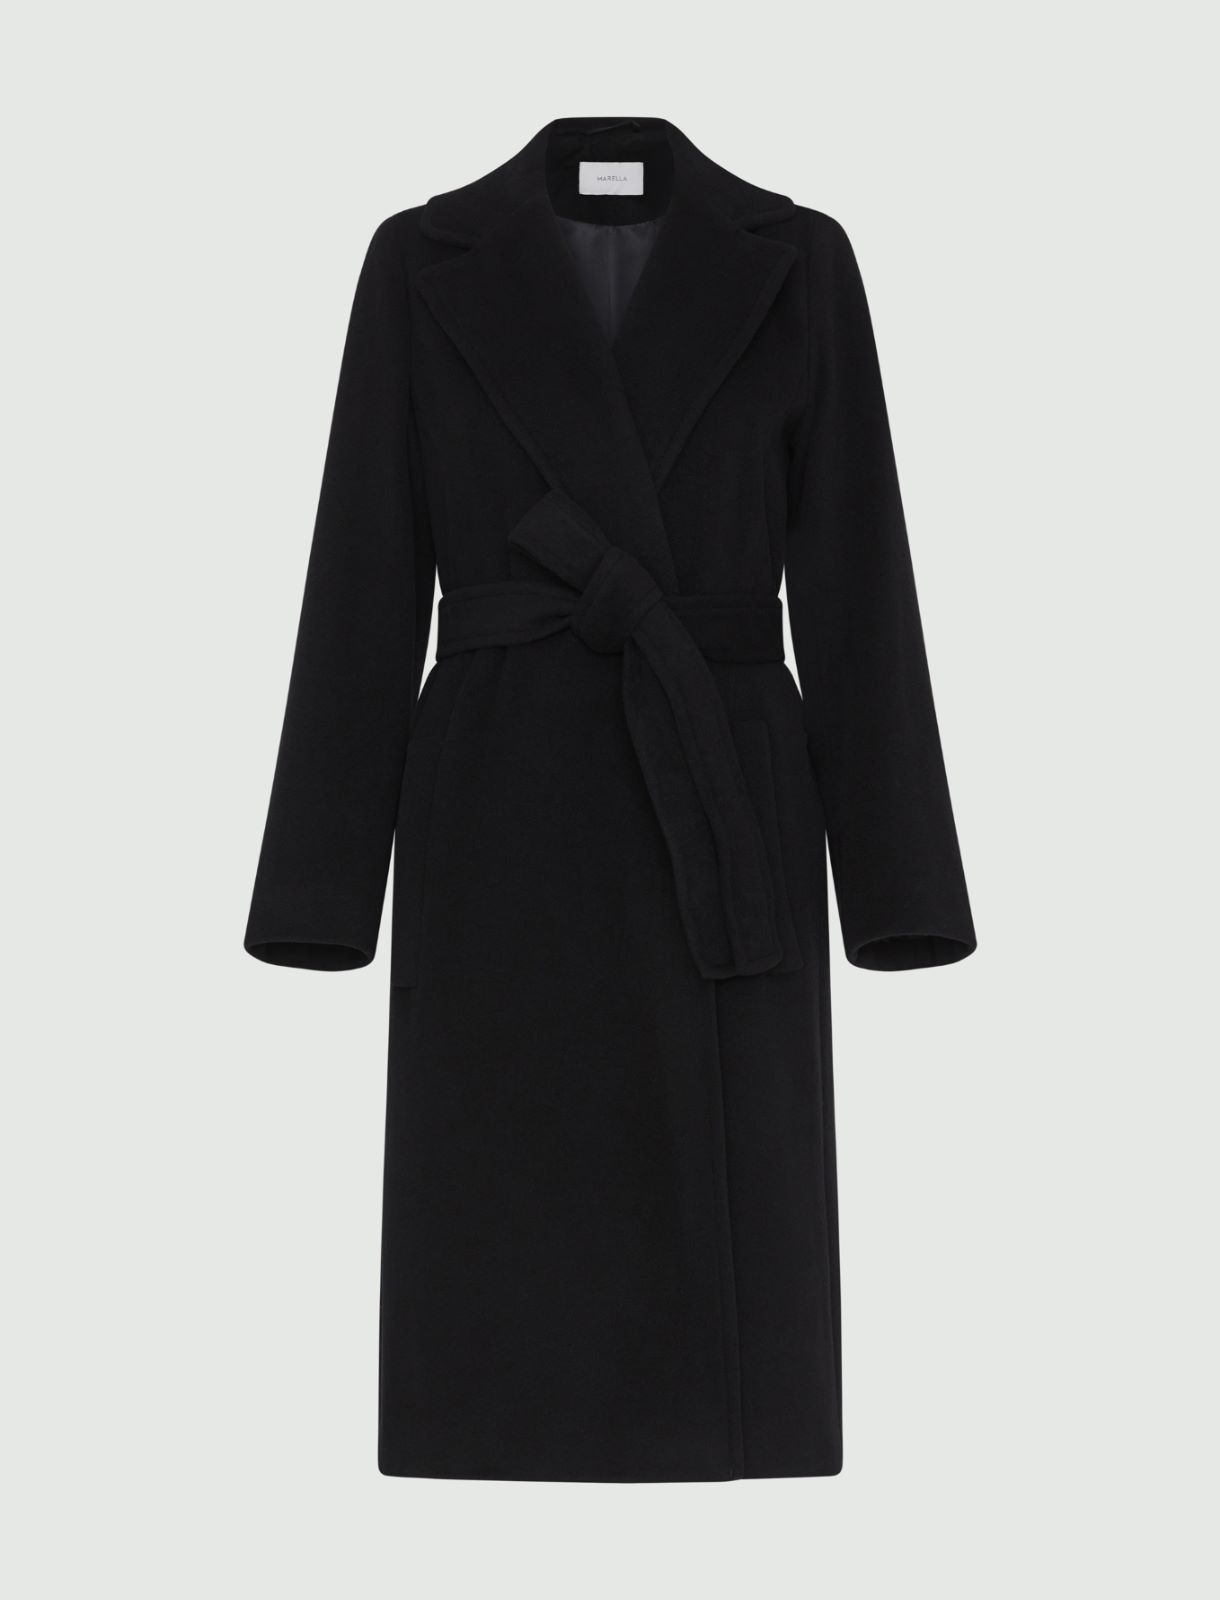 Belted coat - Black - Marella - 5